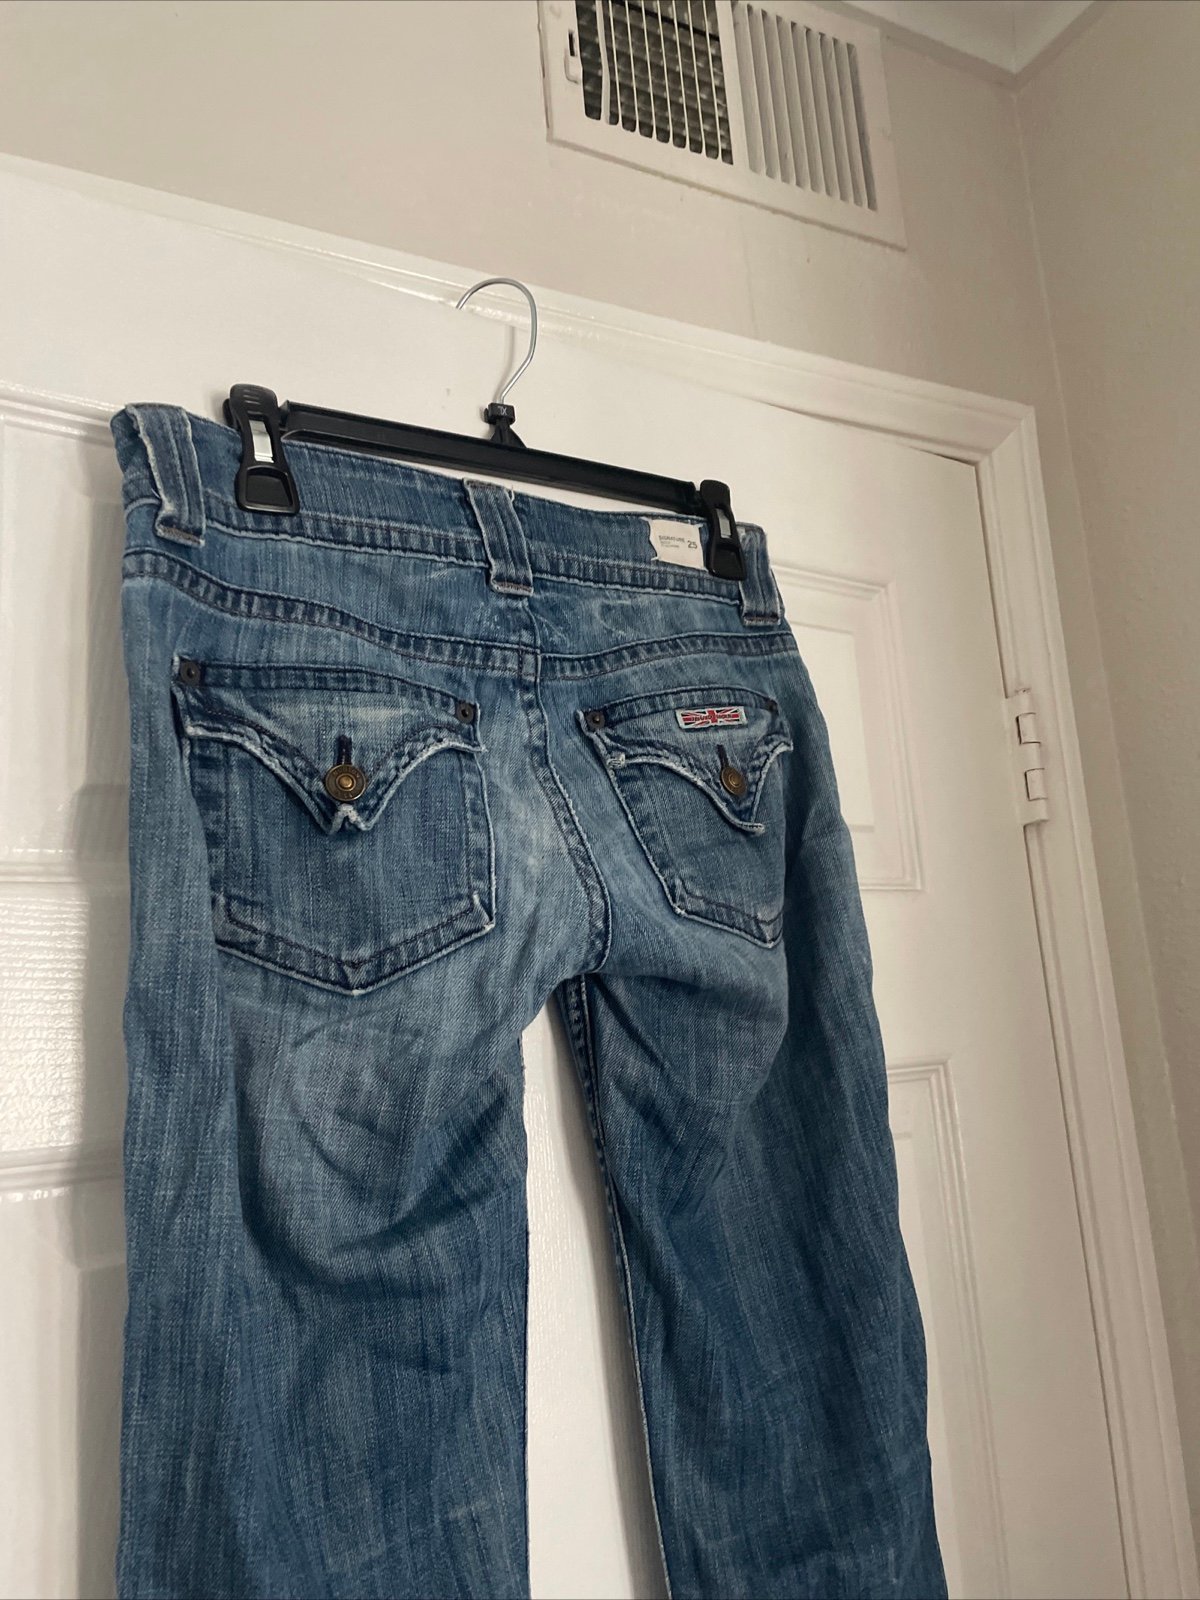 floor price Hudson jeans size 25 bootcut low rise flare kLVsno6Q6 US Sale